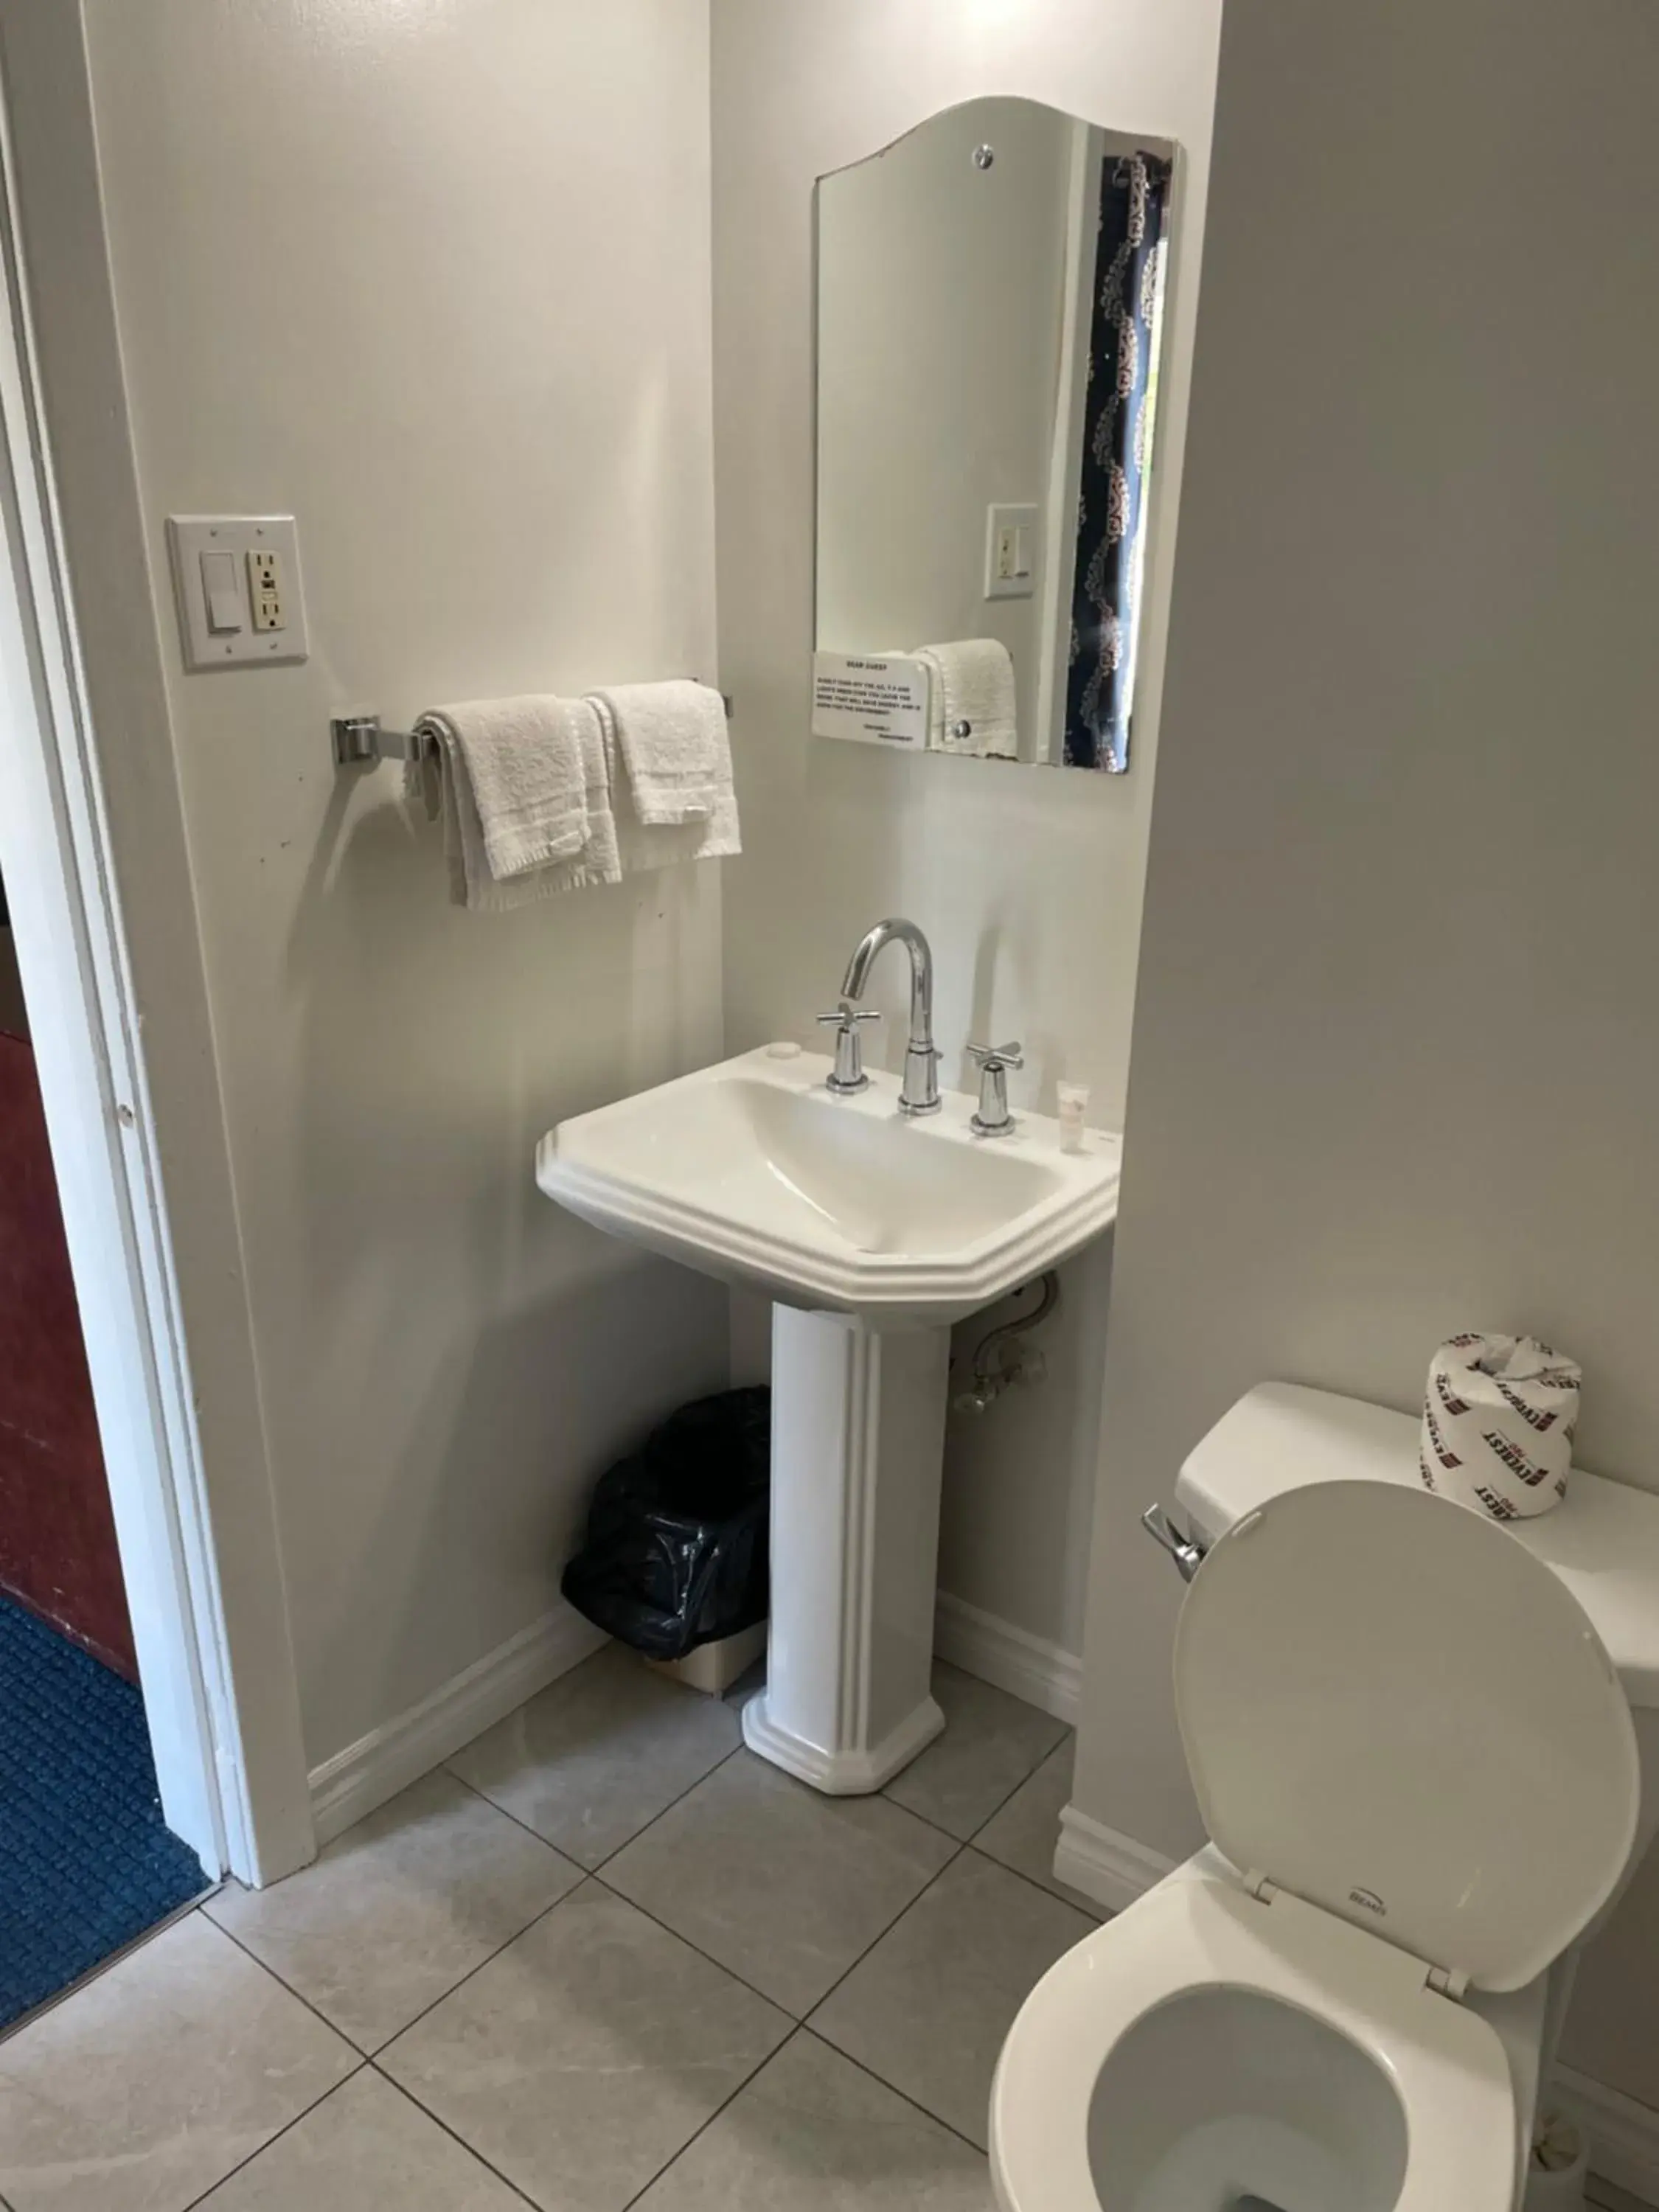 Bathroom in Nites Inn Motel